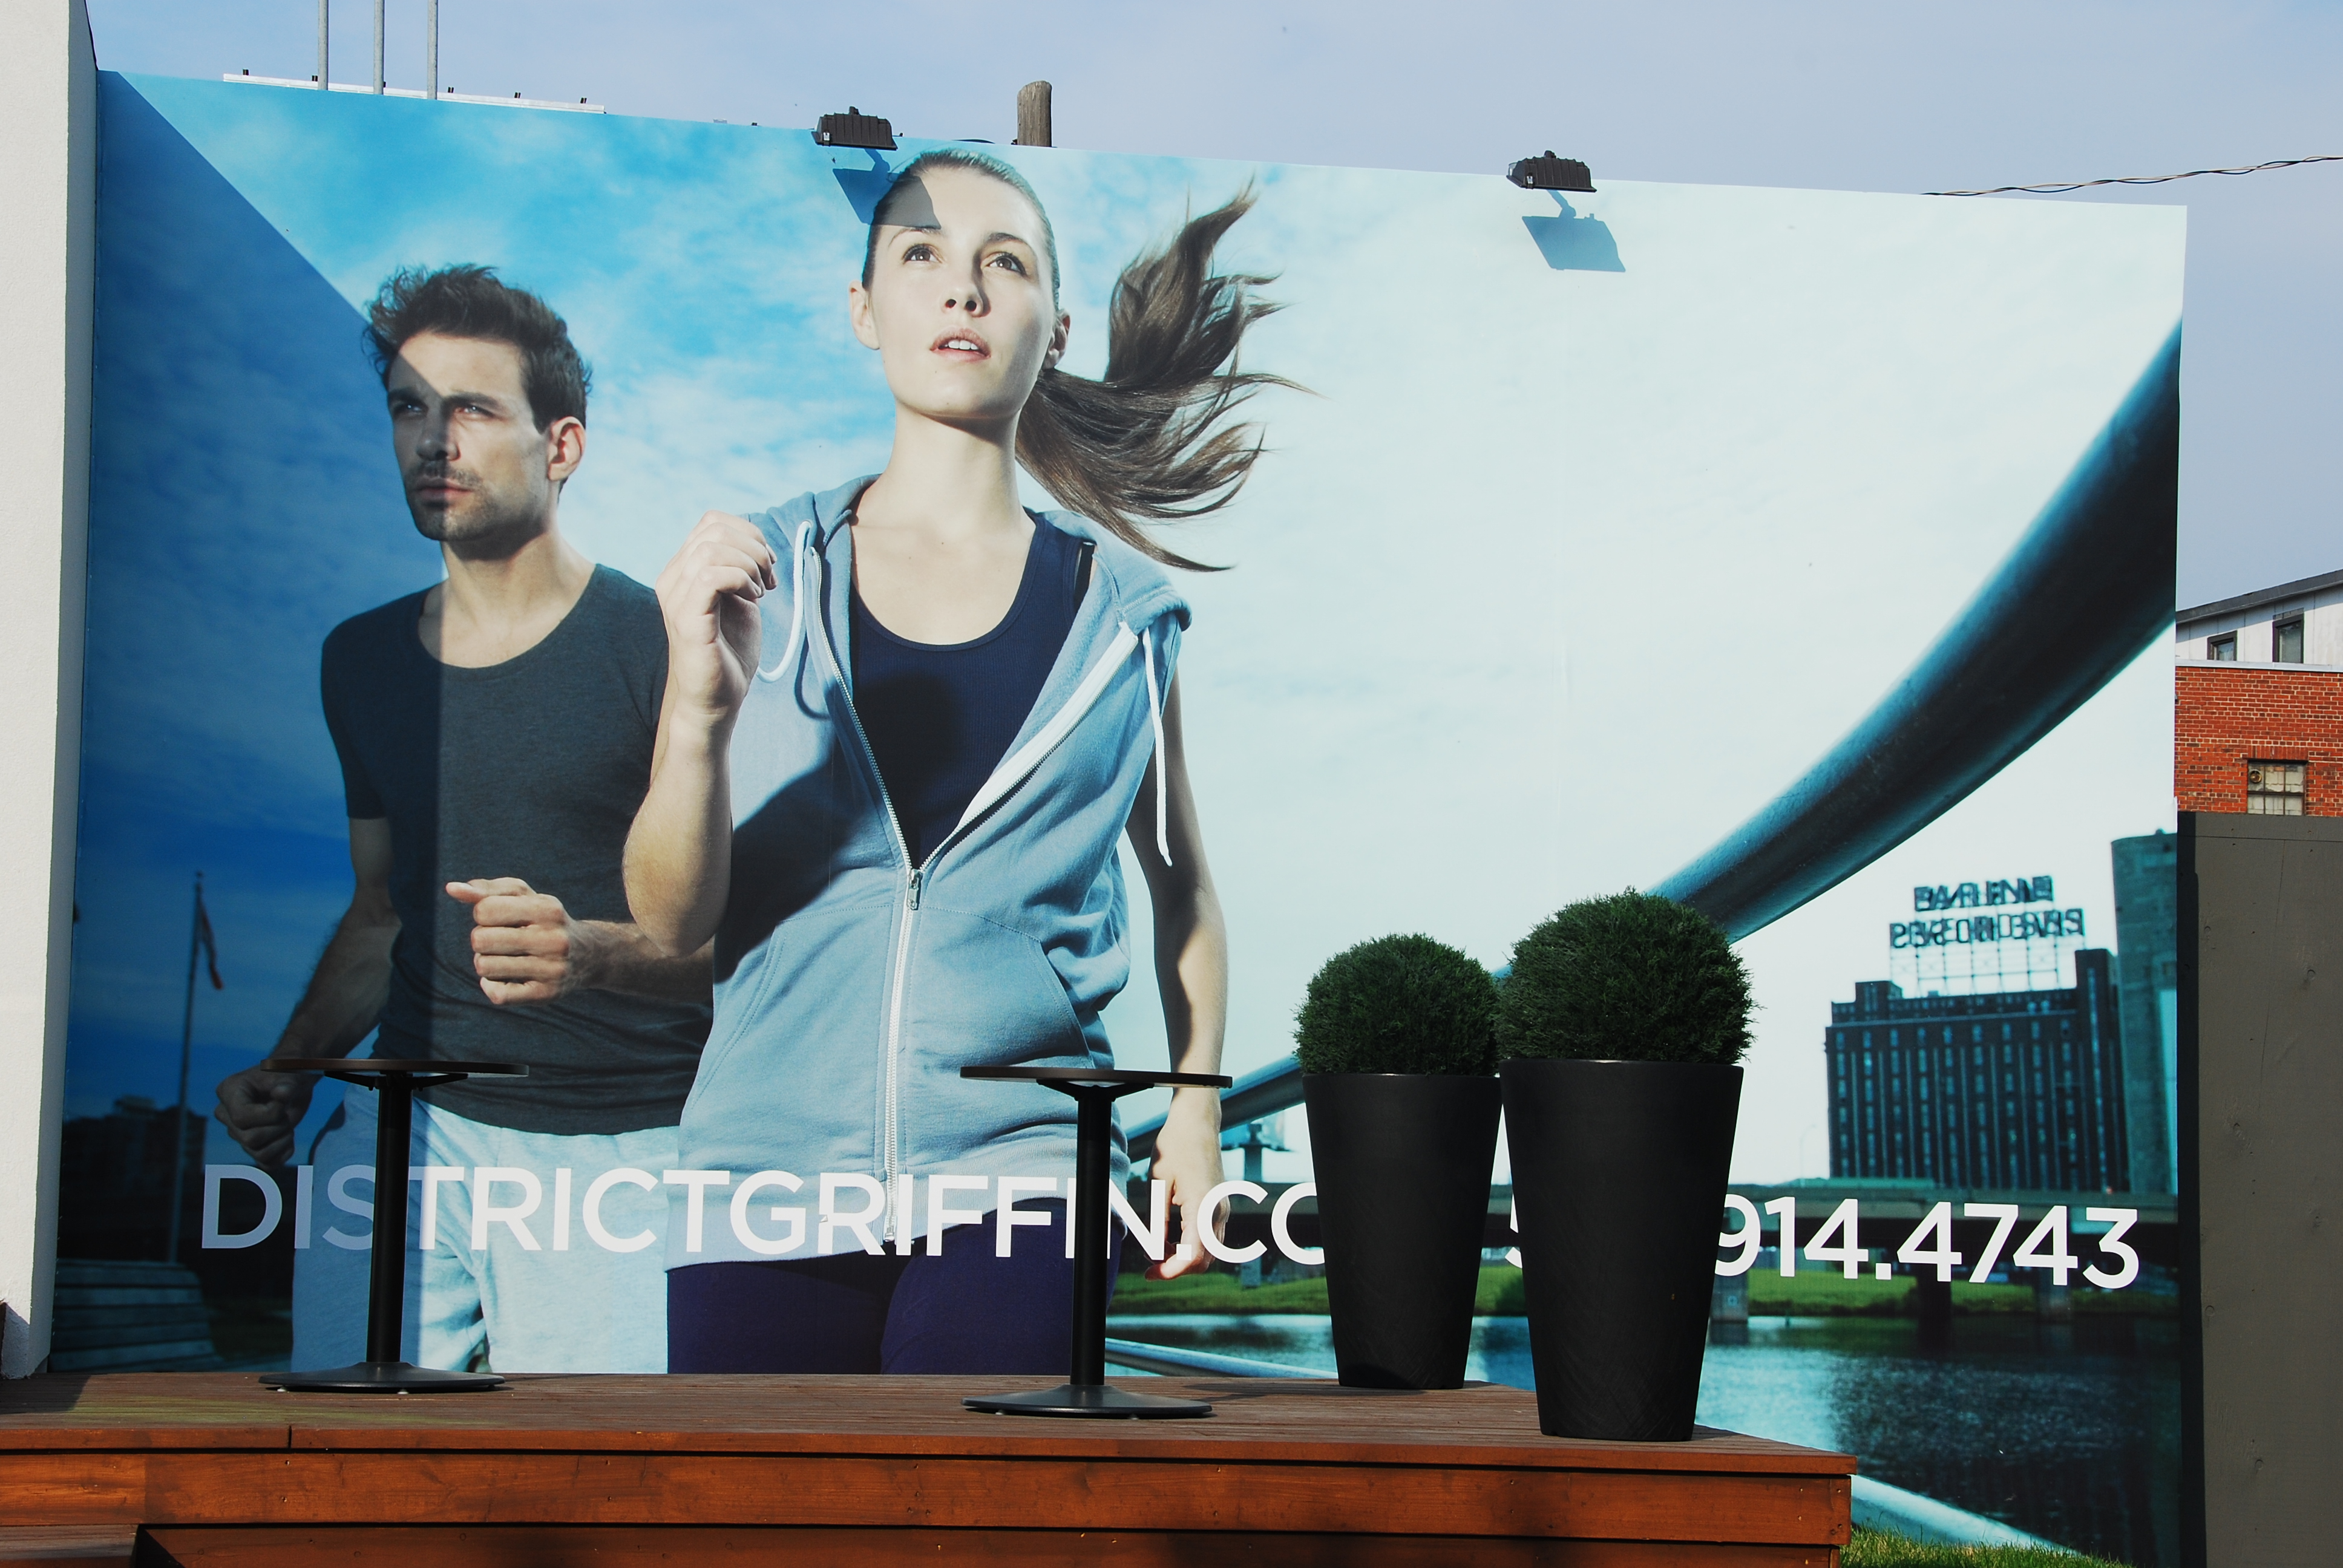 [Image 8 - Billboard advertising “District Griffin” condominiums, 2011. Photo: S. Janssen]